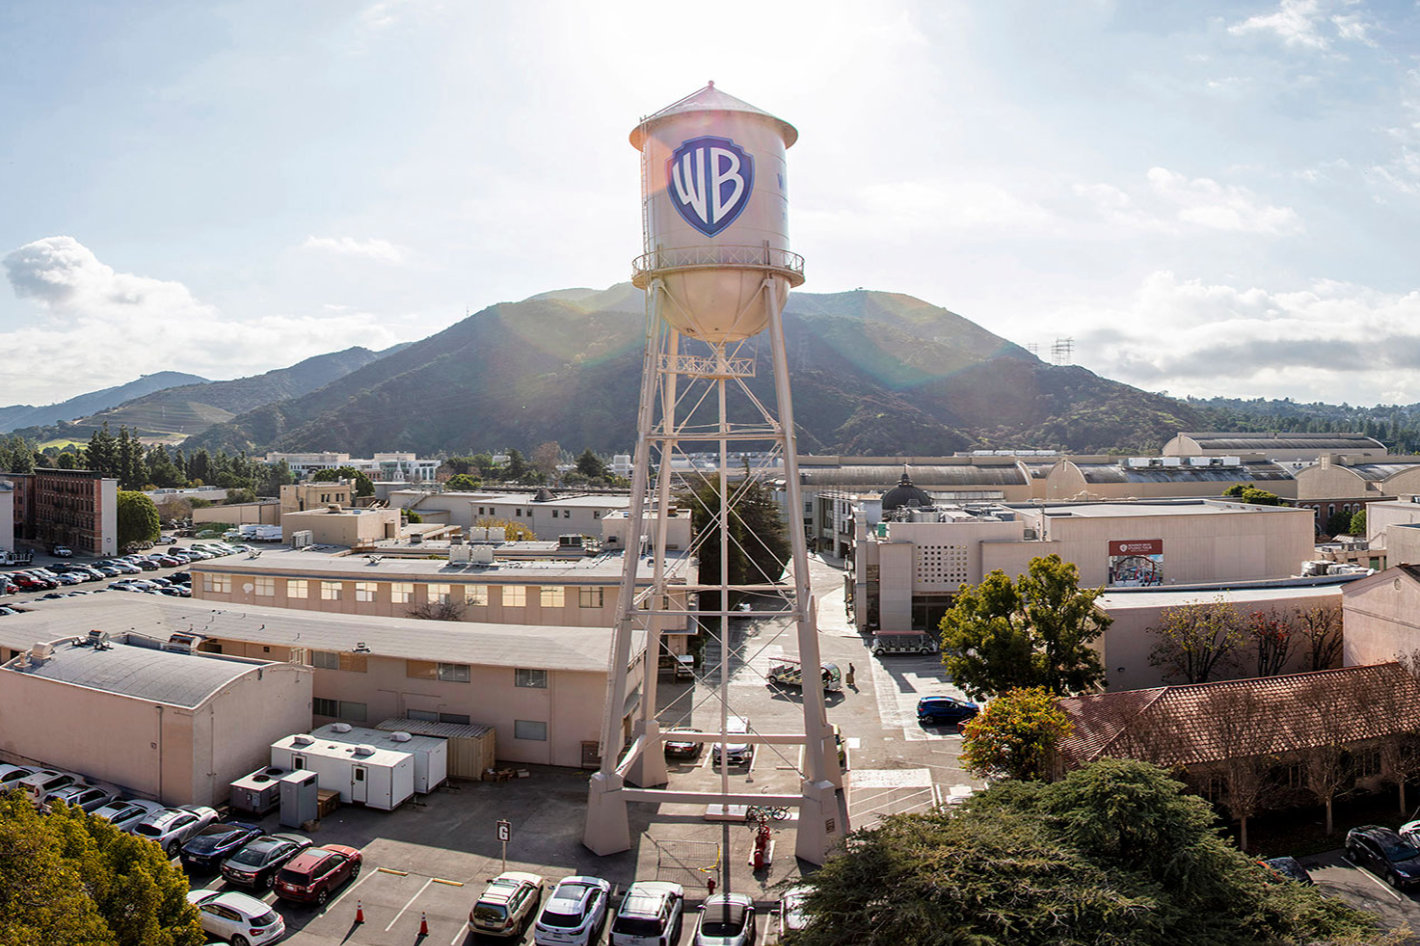 Cine Gear Expo will be held at Warner Bros. Studios